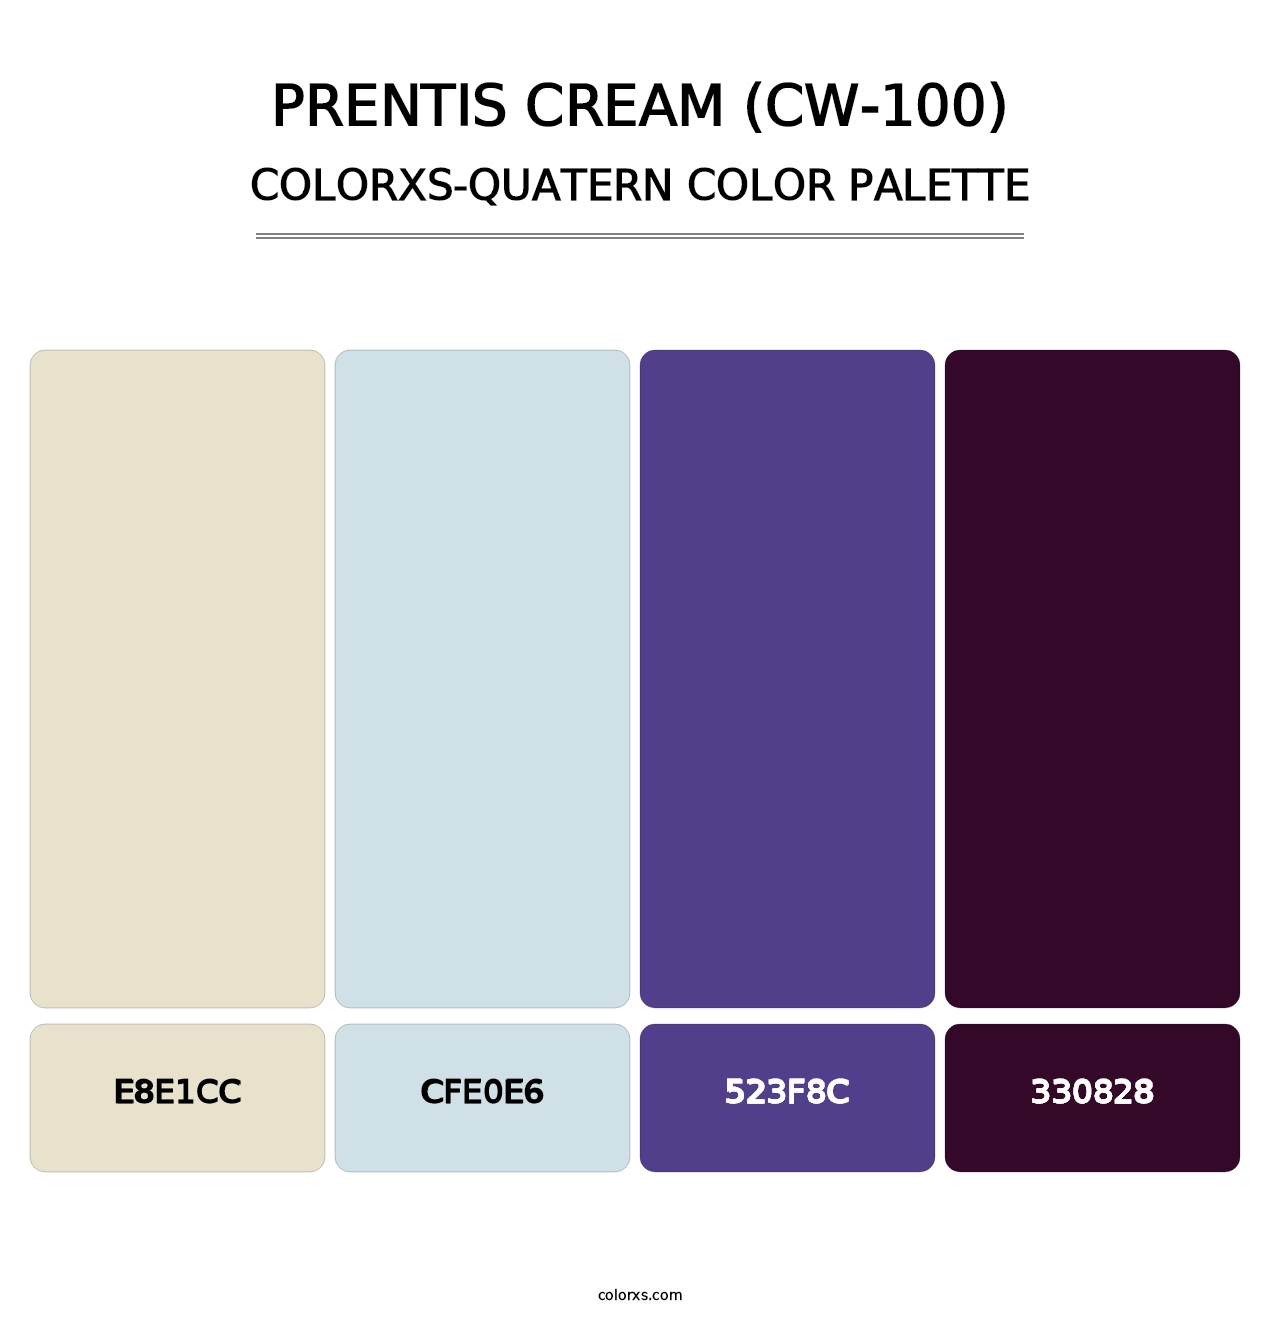 Prentis Cream (CW-100) - Colorxs Quatern Palette